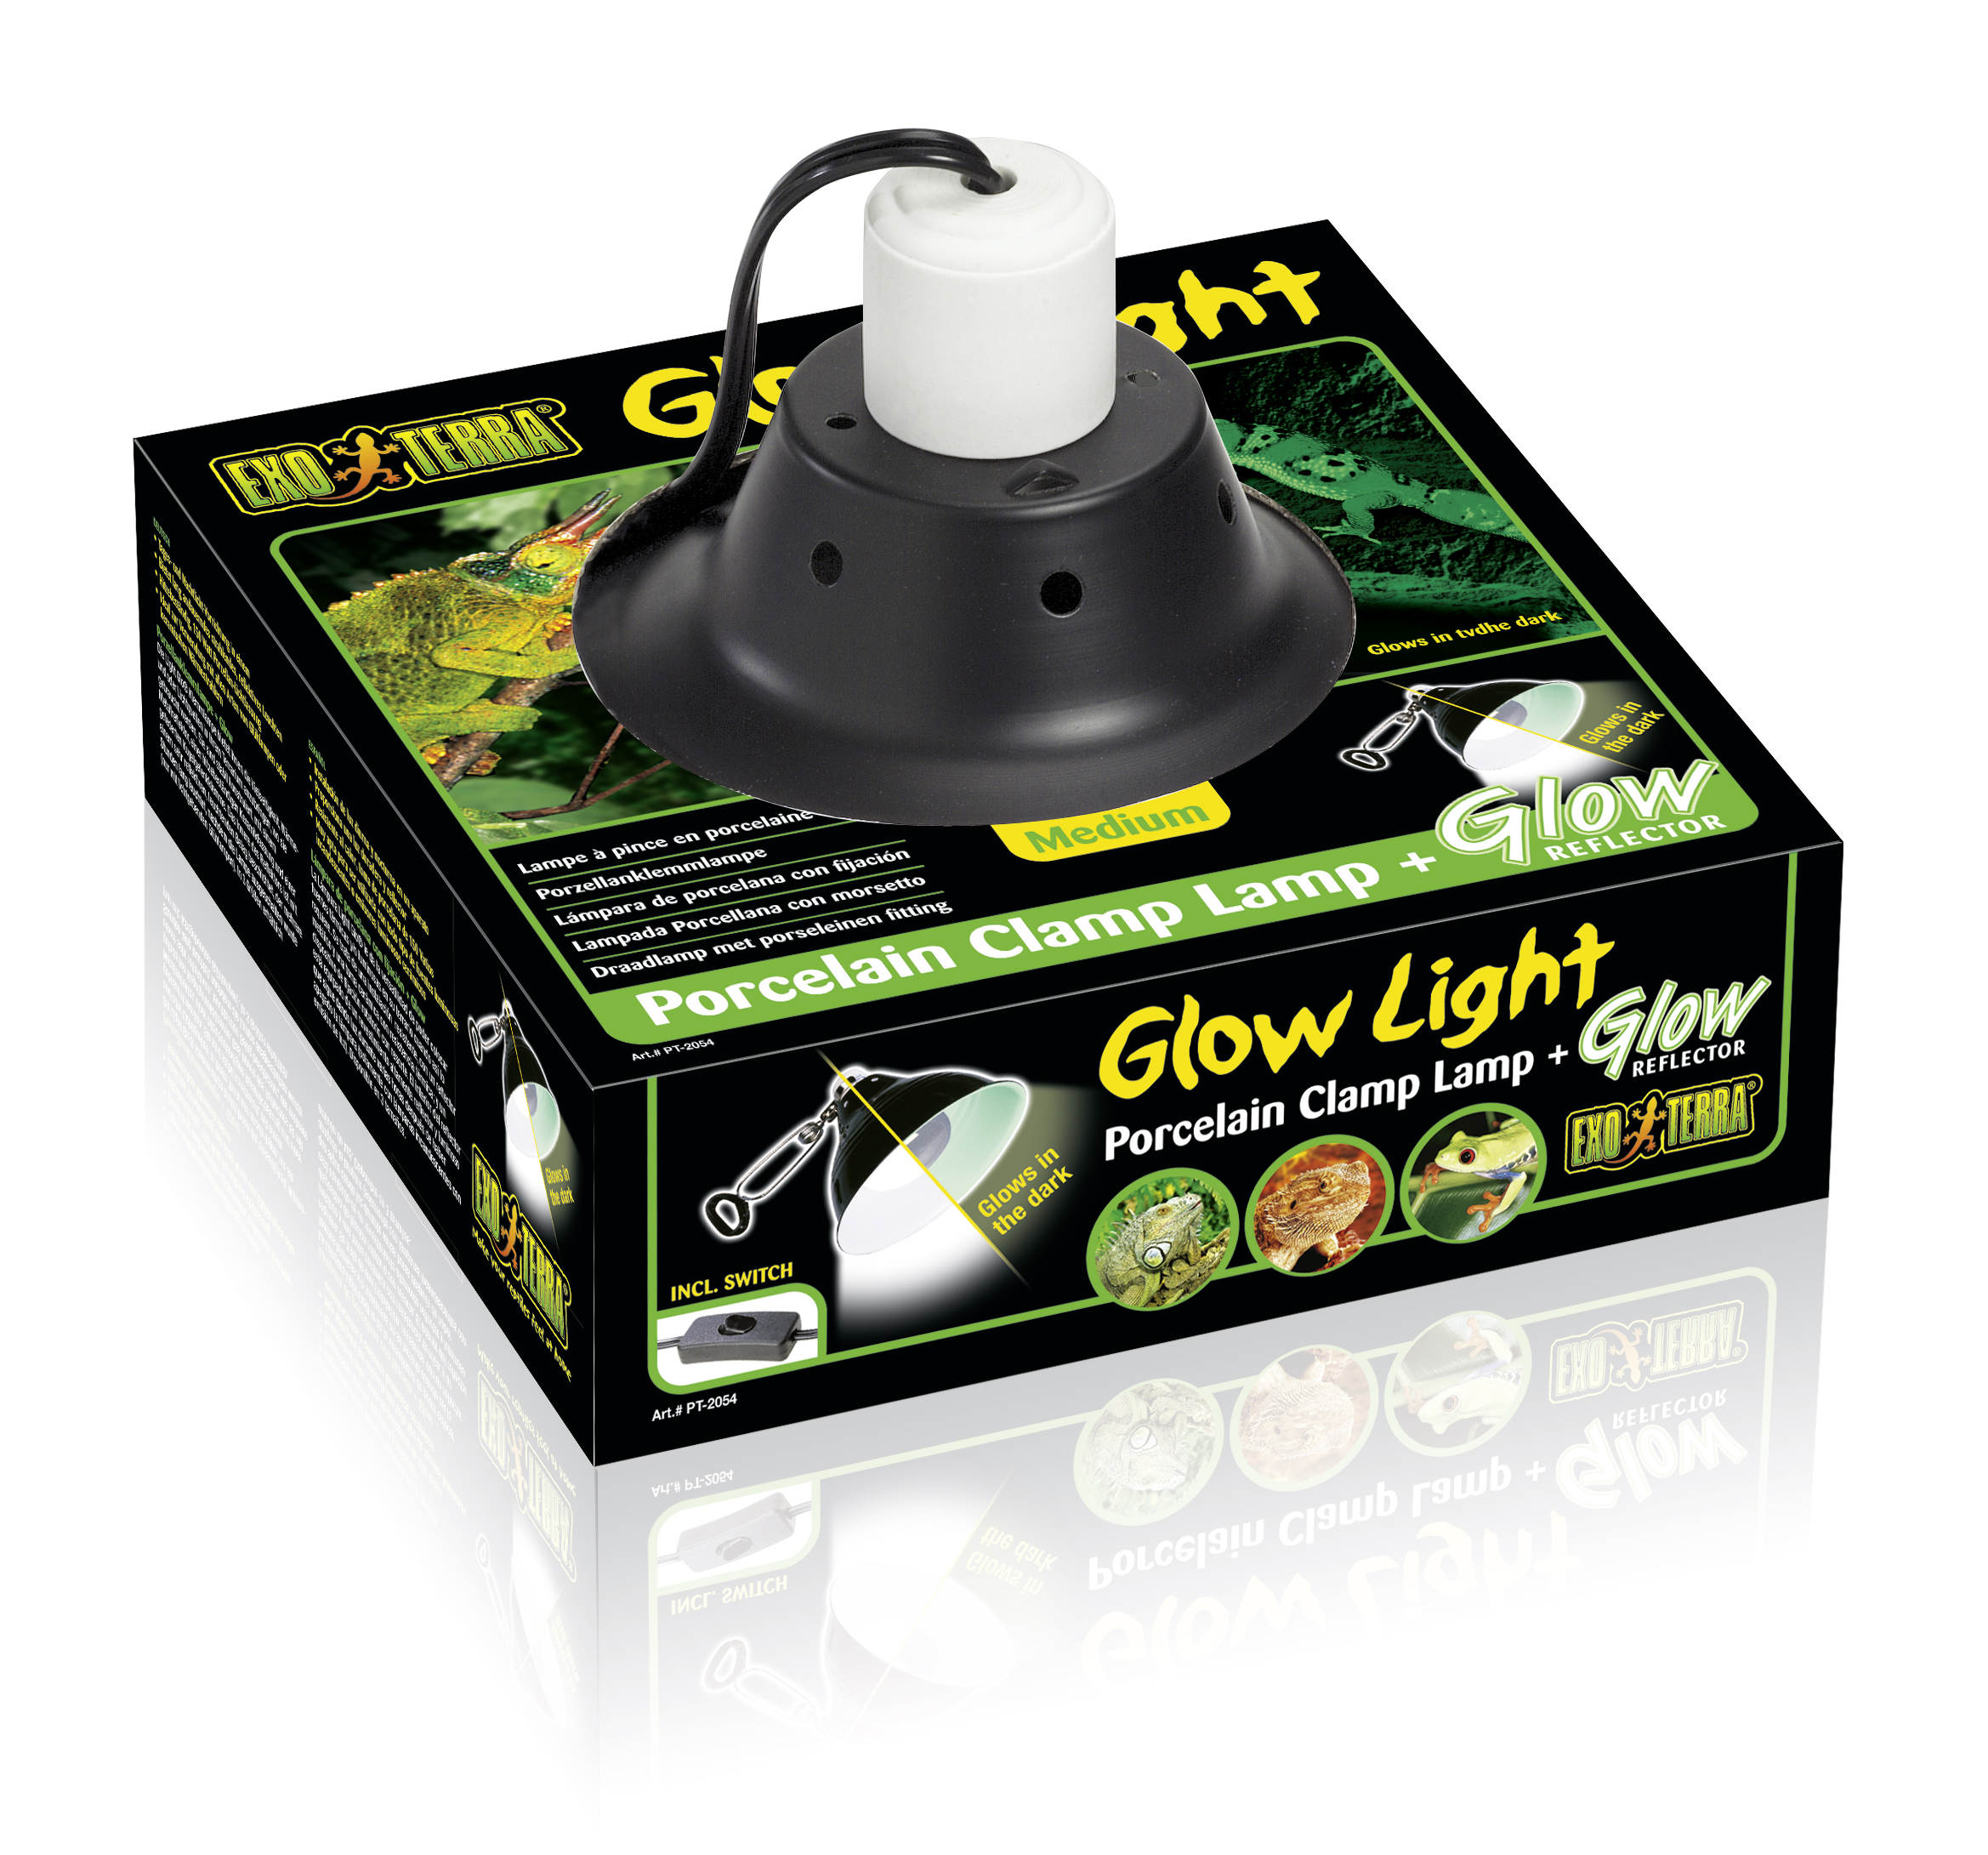 Ex clamp lamp porcelain glow light - <Product shot>